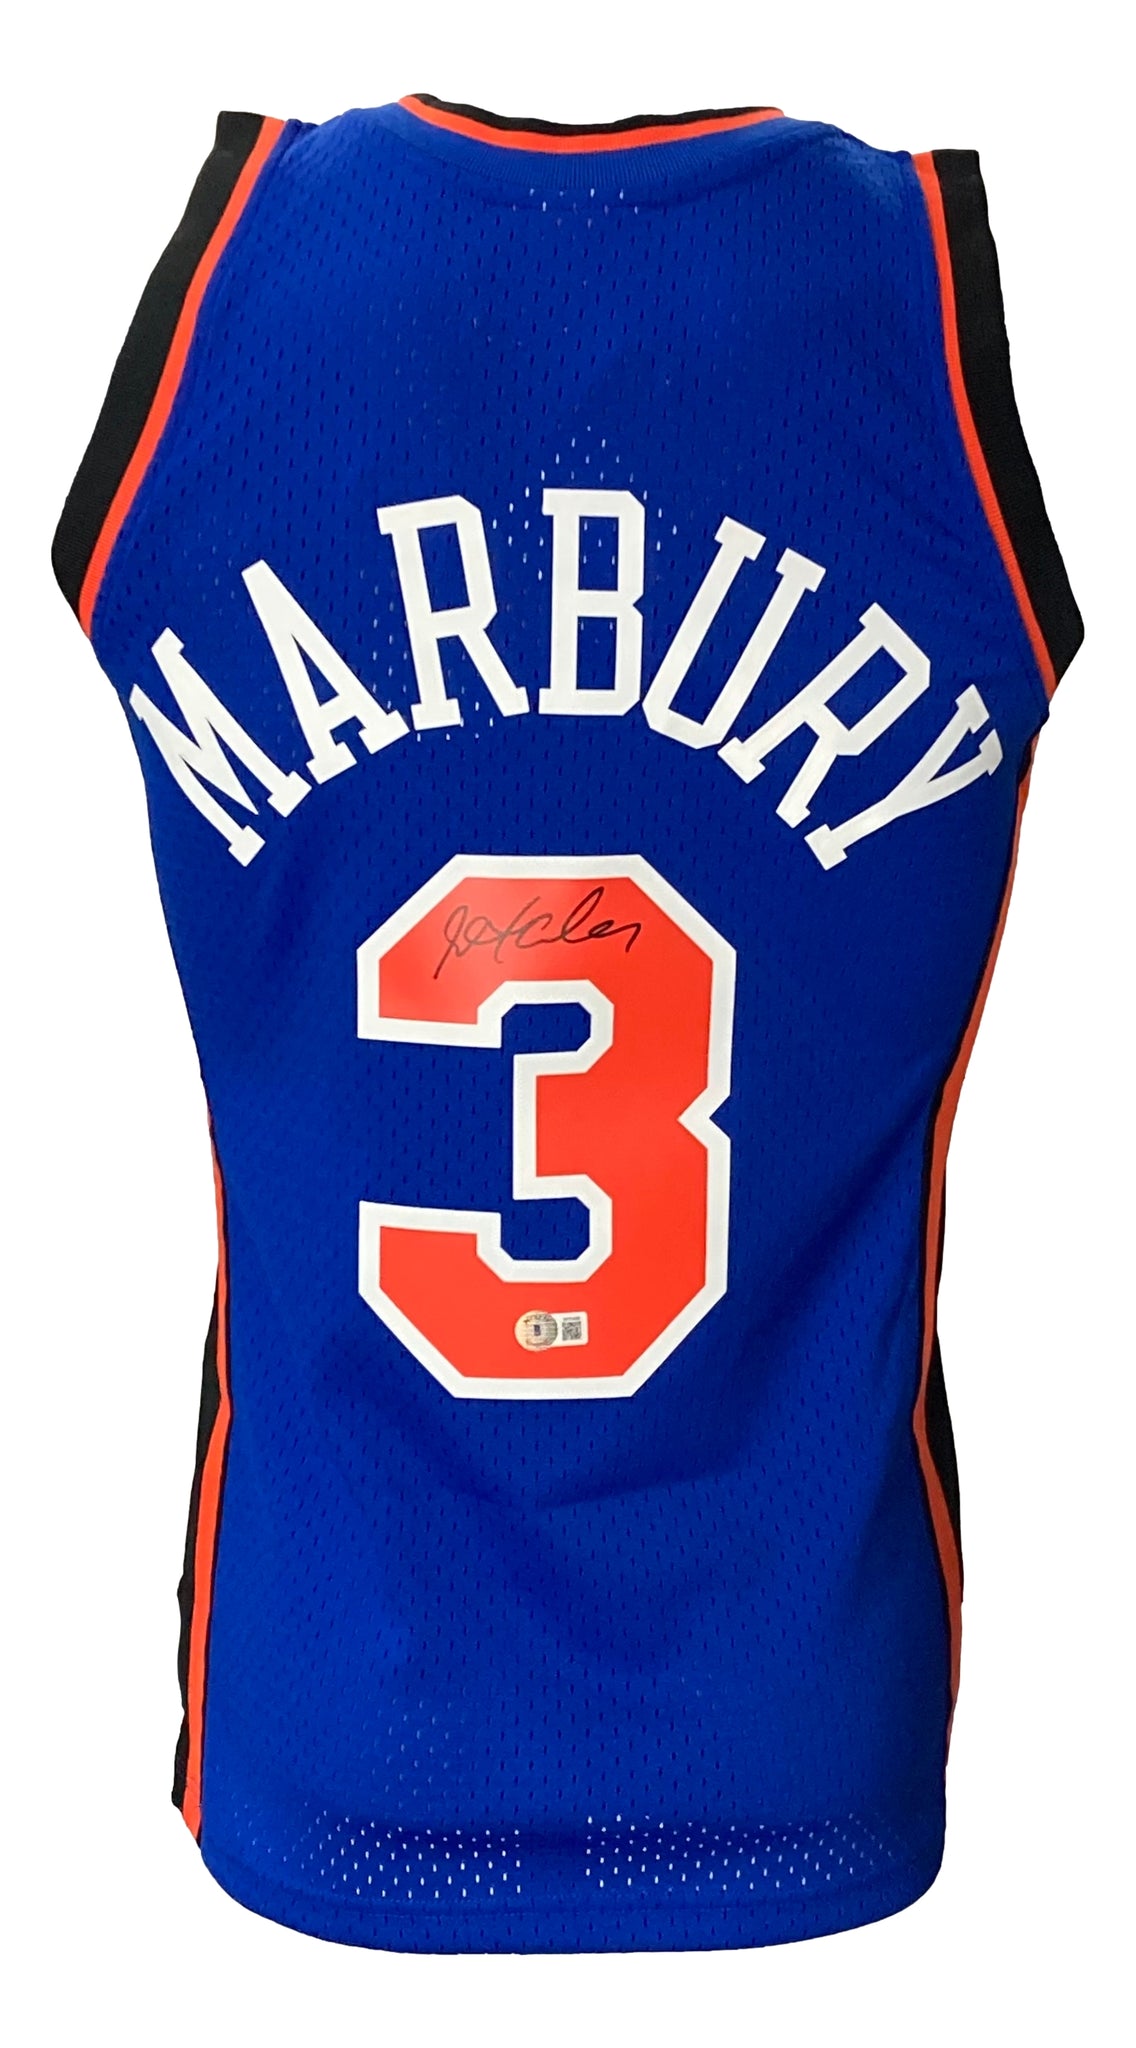 New York Knicks Stephon Marbury Signed Pro Style White Jersey BAS